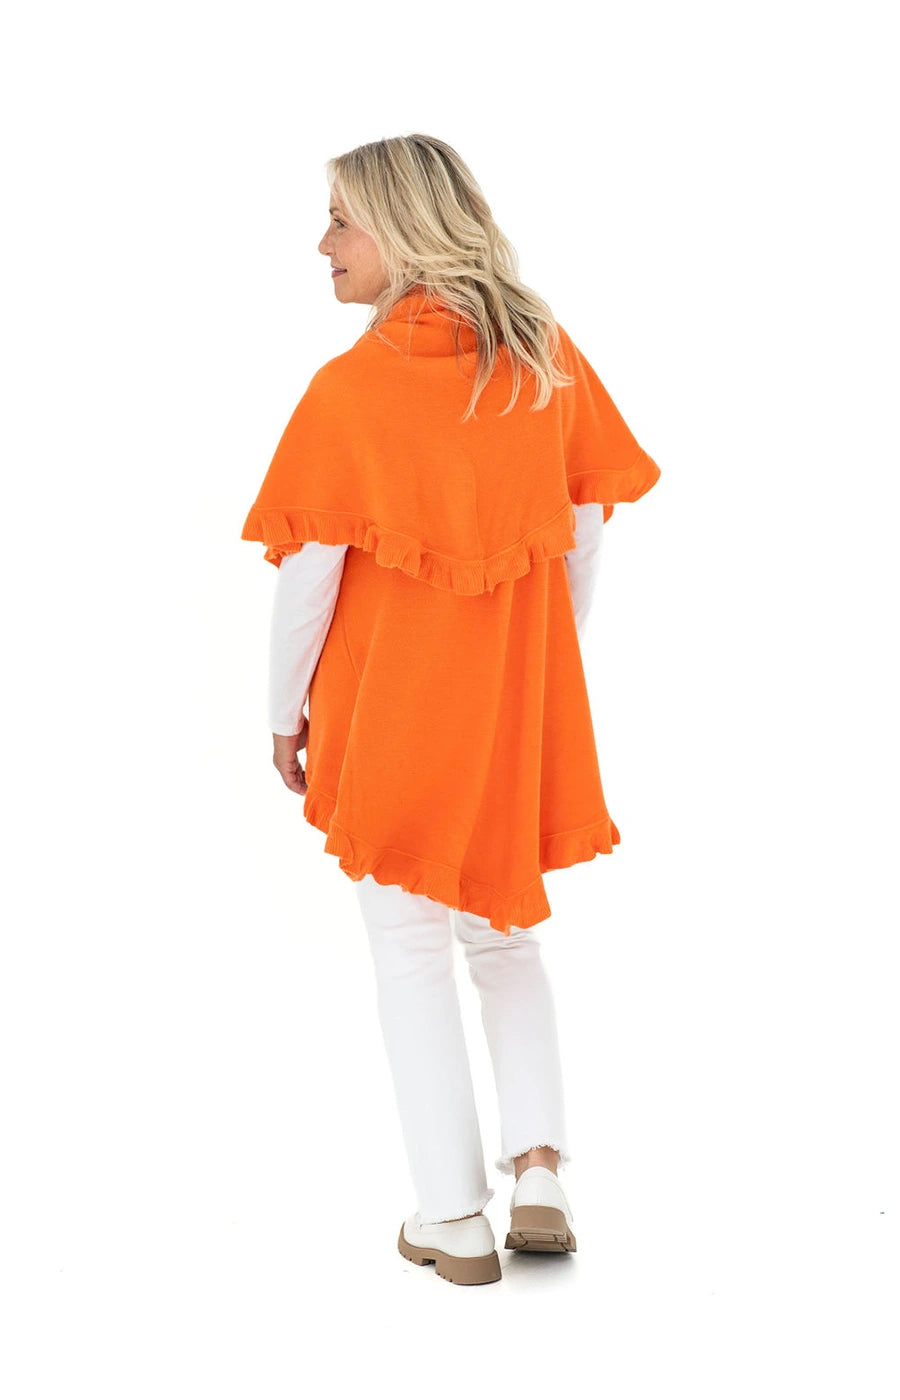 Shawl Sweater Vest in Orange with Ruffle Trim